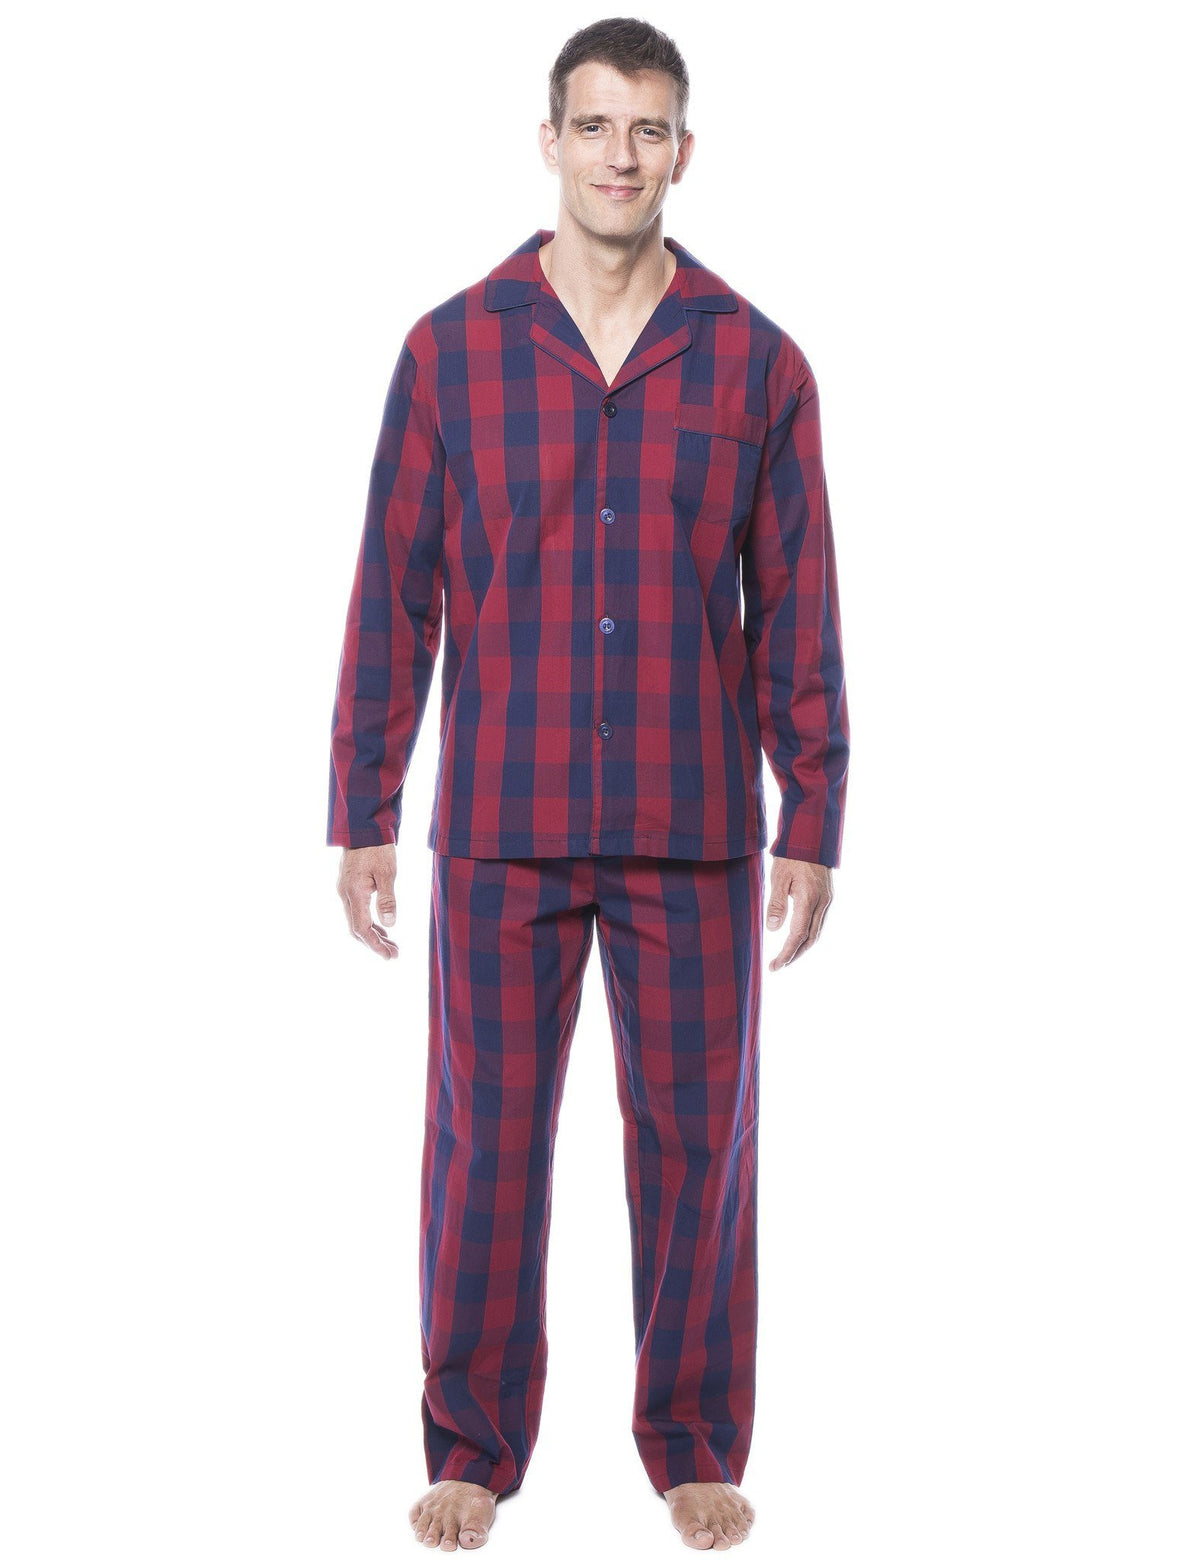 Men's 100% Woven Cotton Pajama Sleepwear Set - Gingham Red/Navy